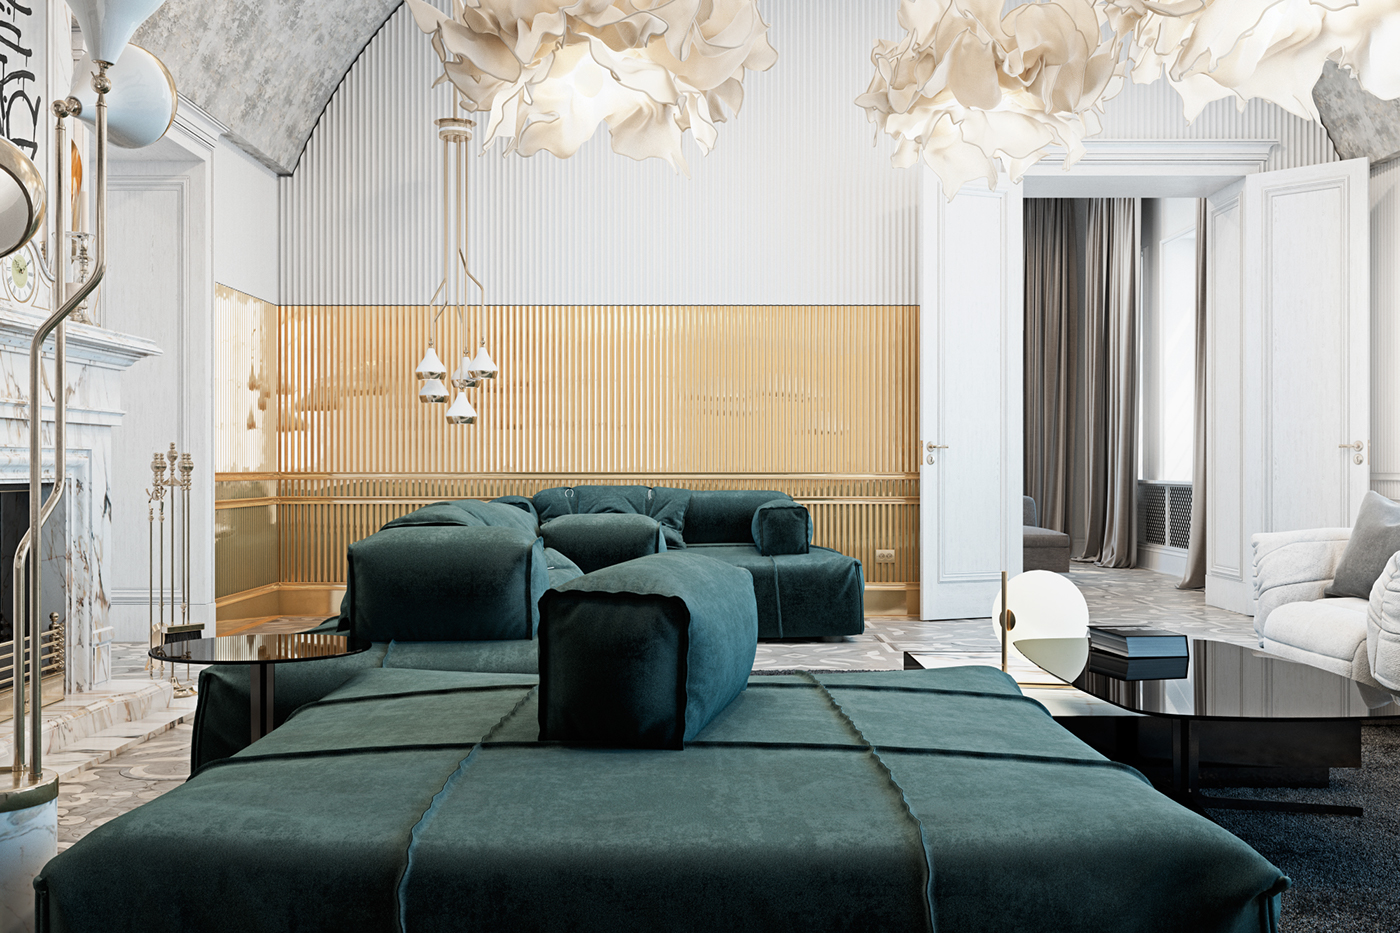 Interior Design architecture Italy Residence livingroom baxter Delightfull Flos poltronafrau Valcucine Kristalia boca do lobo